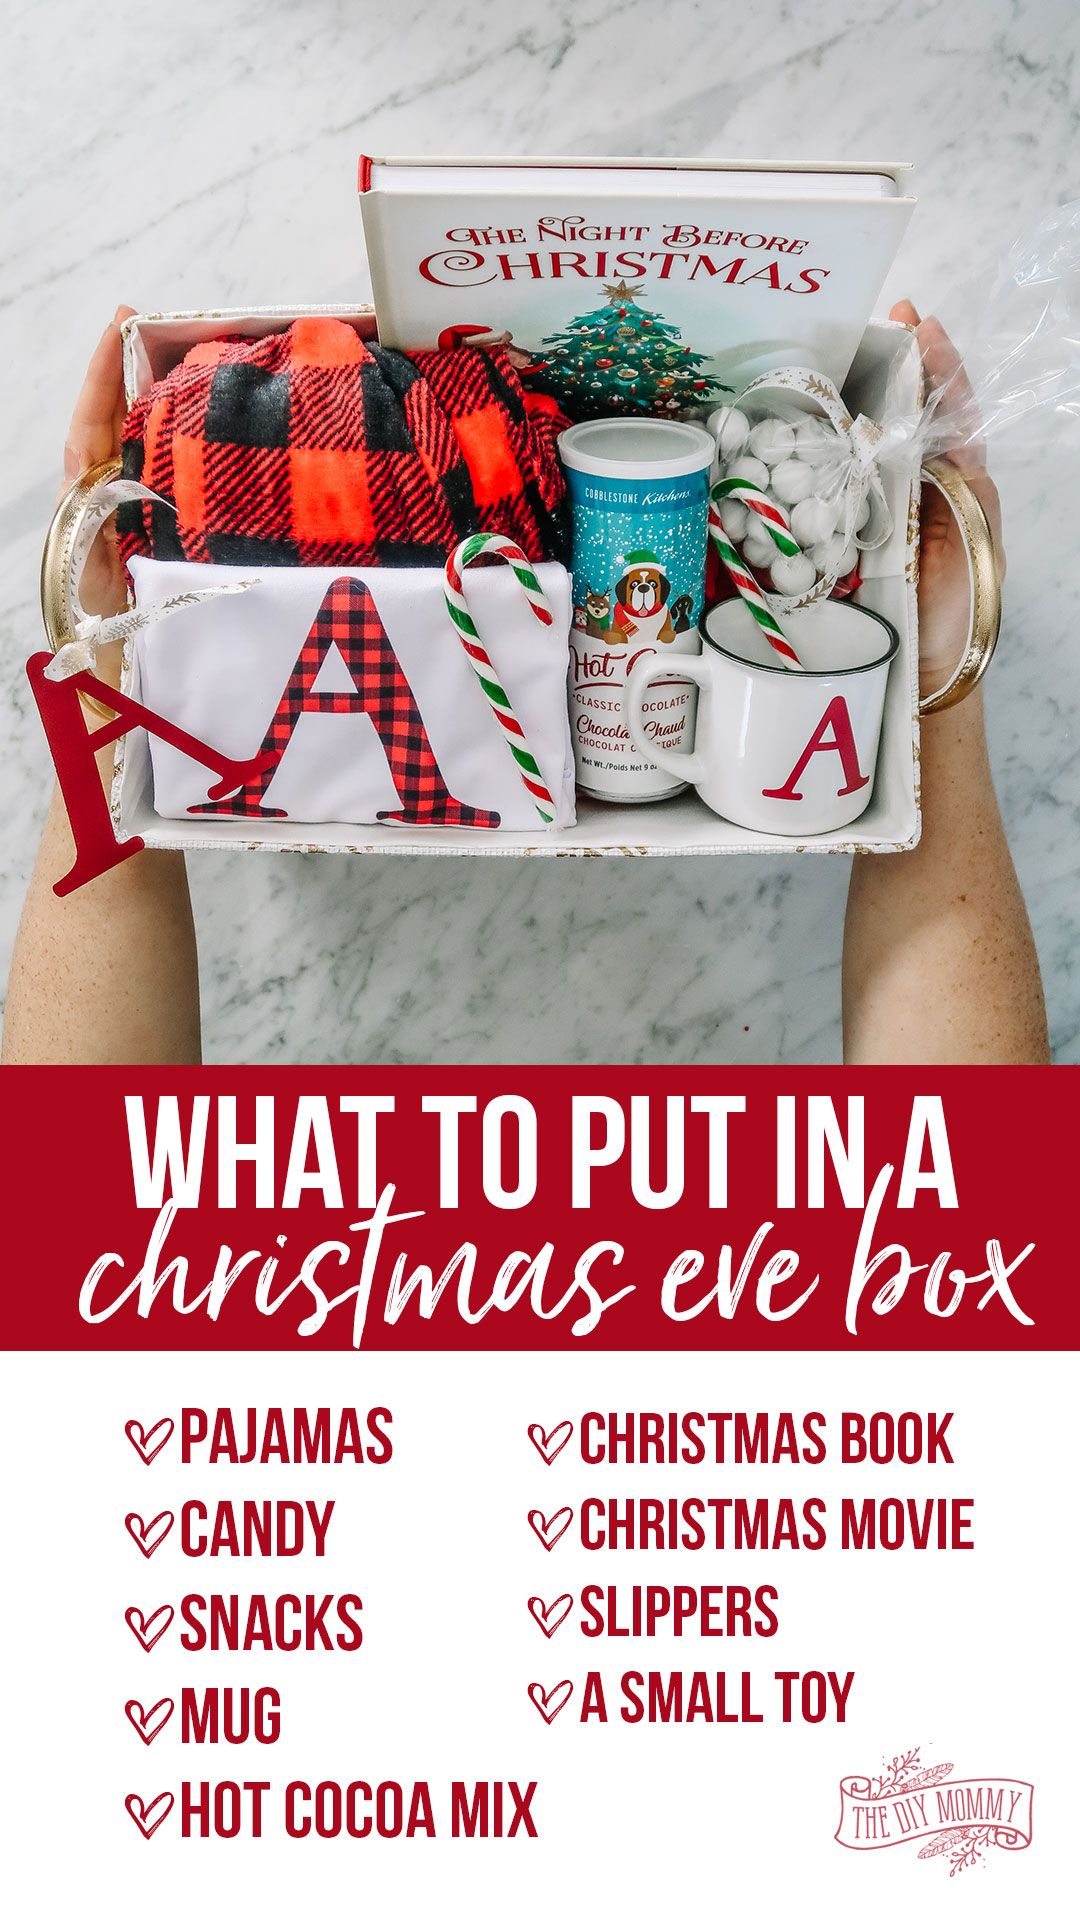 Make a Personalized Christmas Eve Box